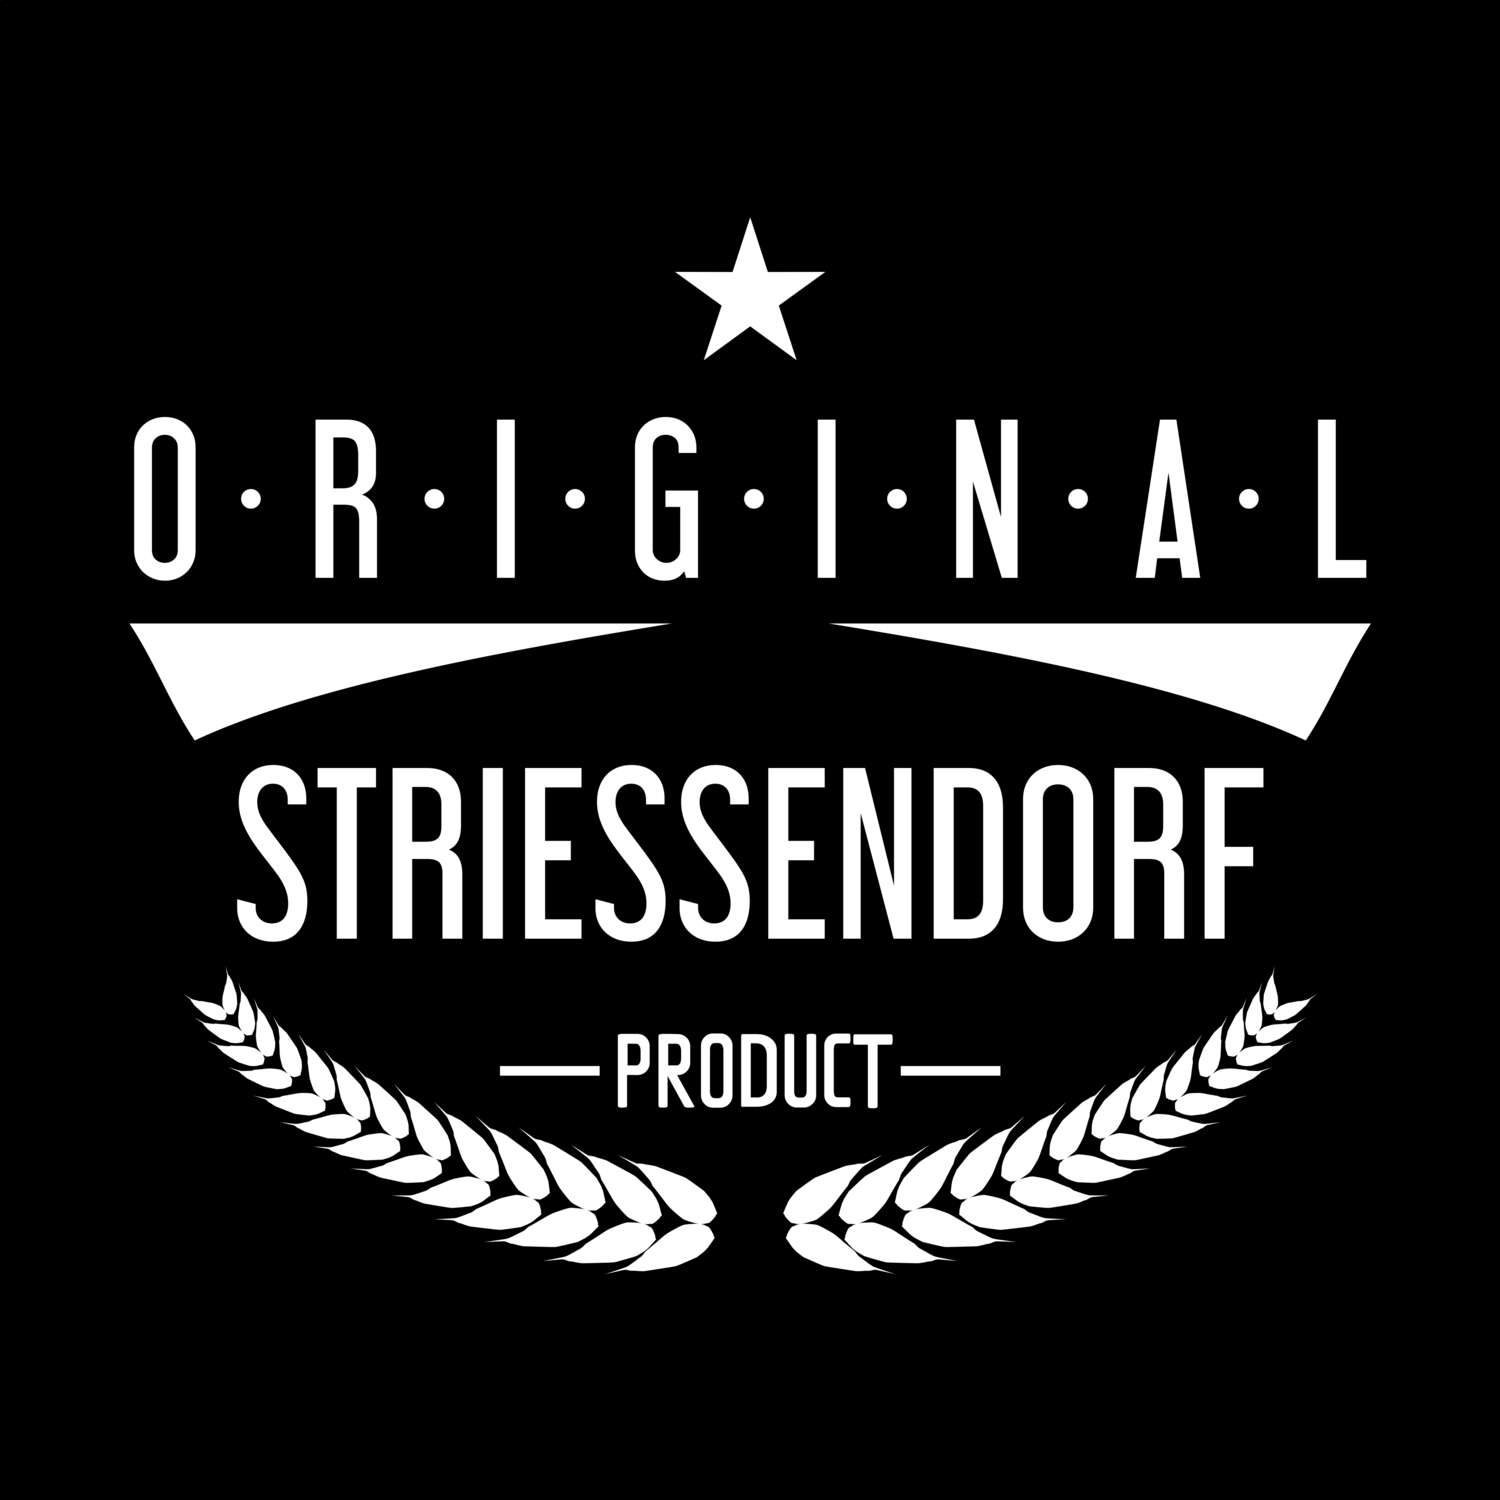 Striessendorf T-Shirt »Original Product«